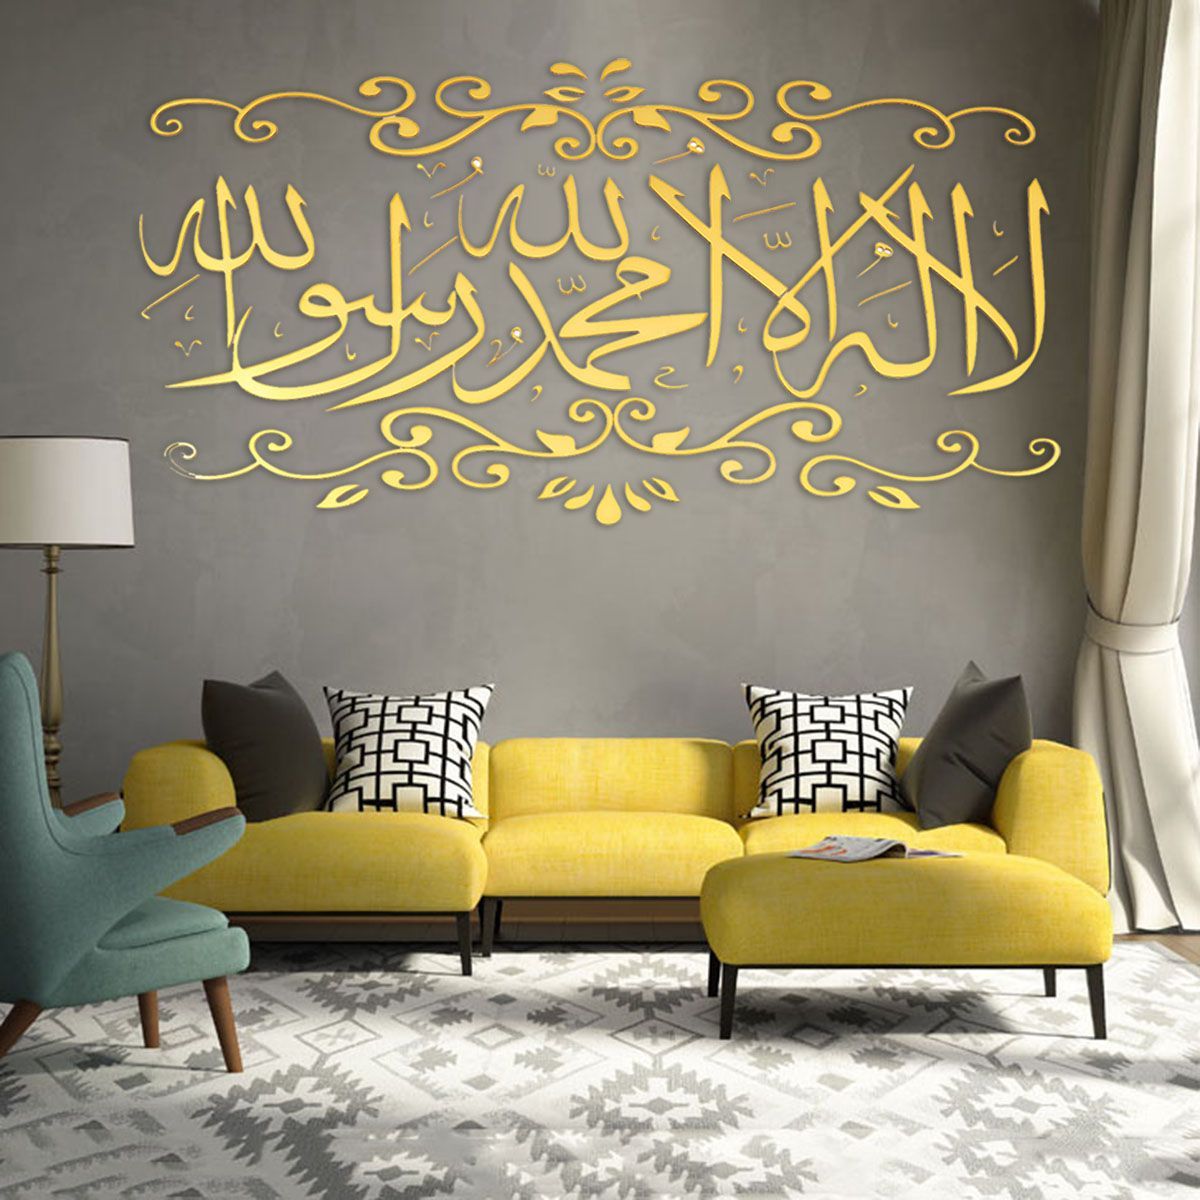 3D-Acrylic-Mirror-Wall-Sticker-Home-Decor-Living-Room-Mural-Islamic-Wall-Decal-1680344